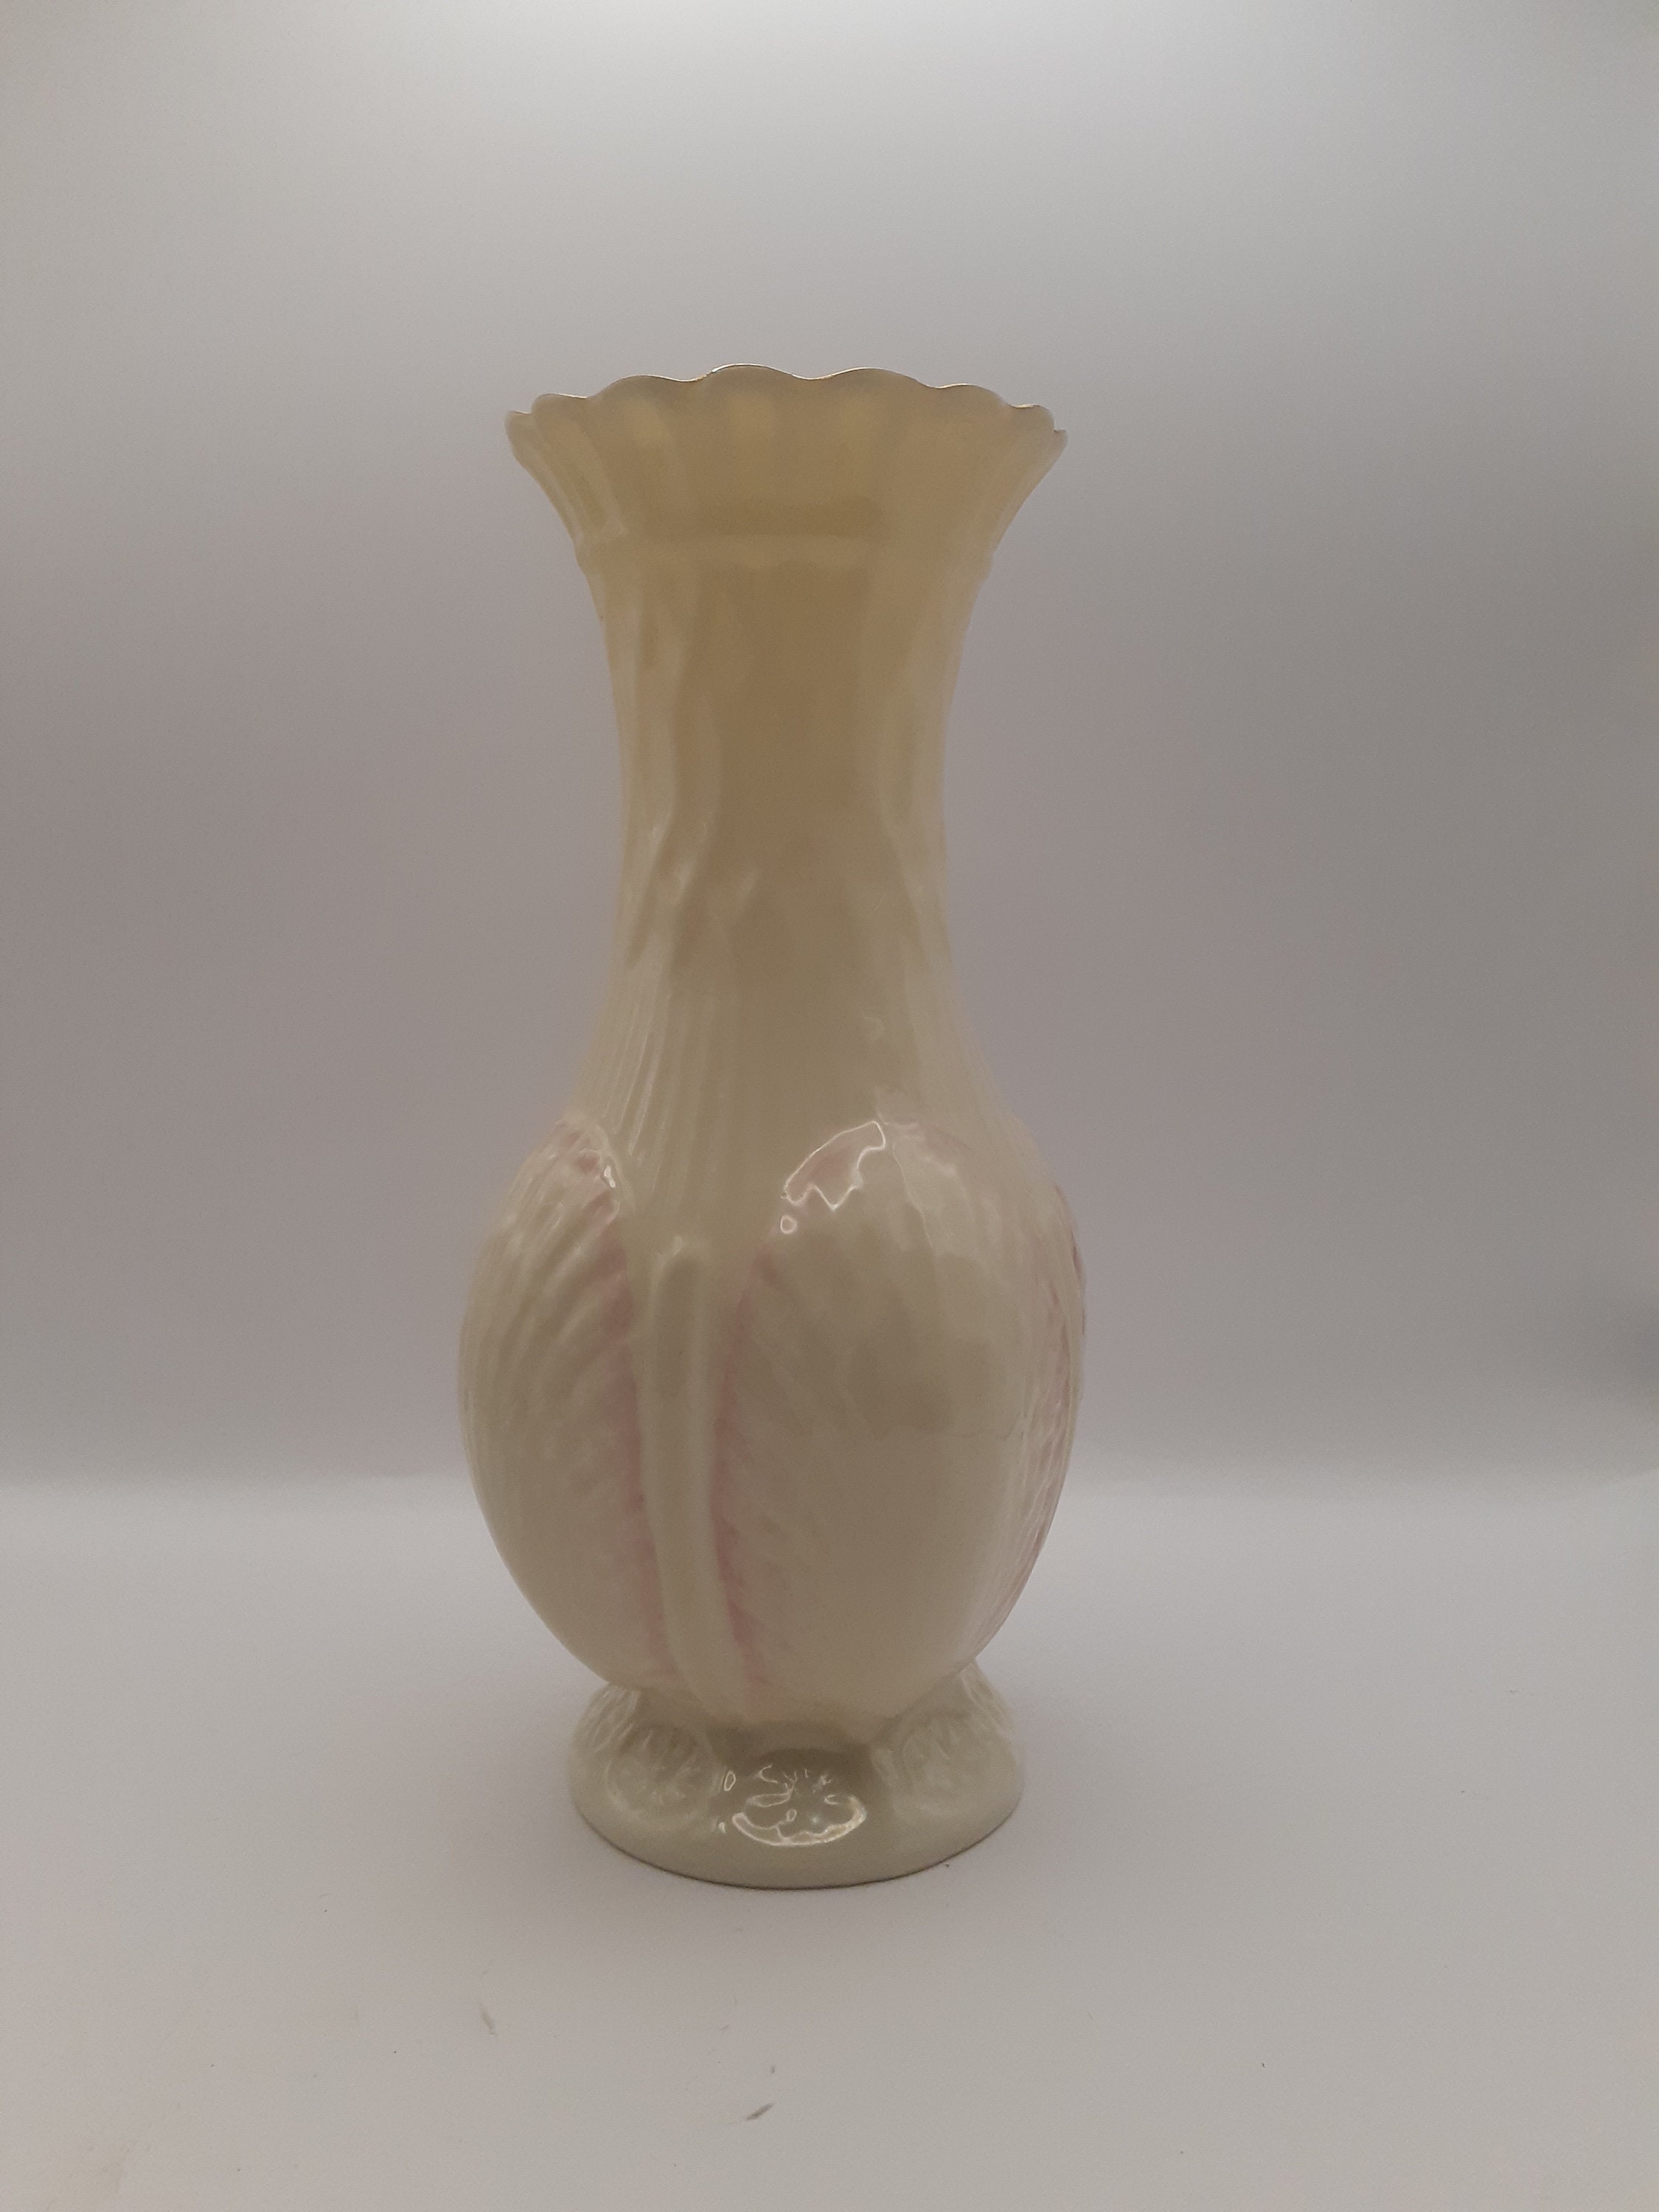 Pedestal ceramic & resin seashell vase /pottery /gold color / Home  decorative